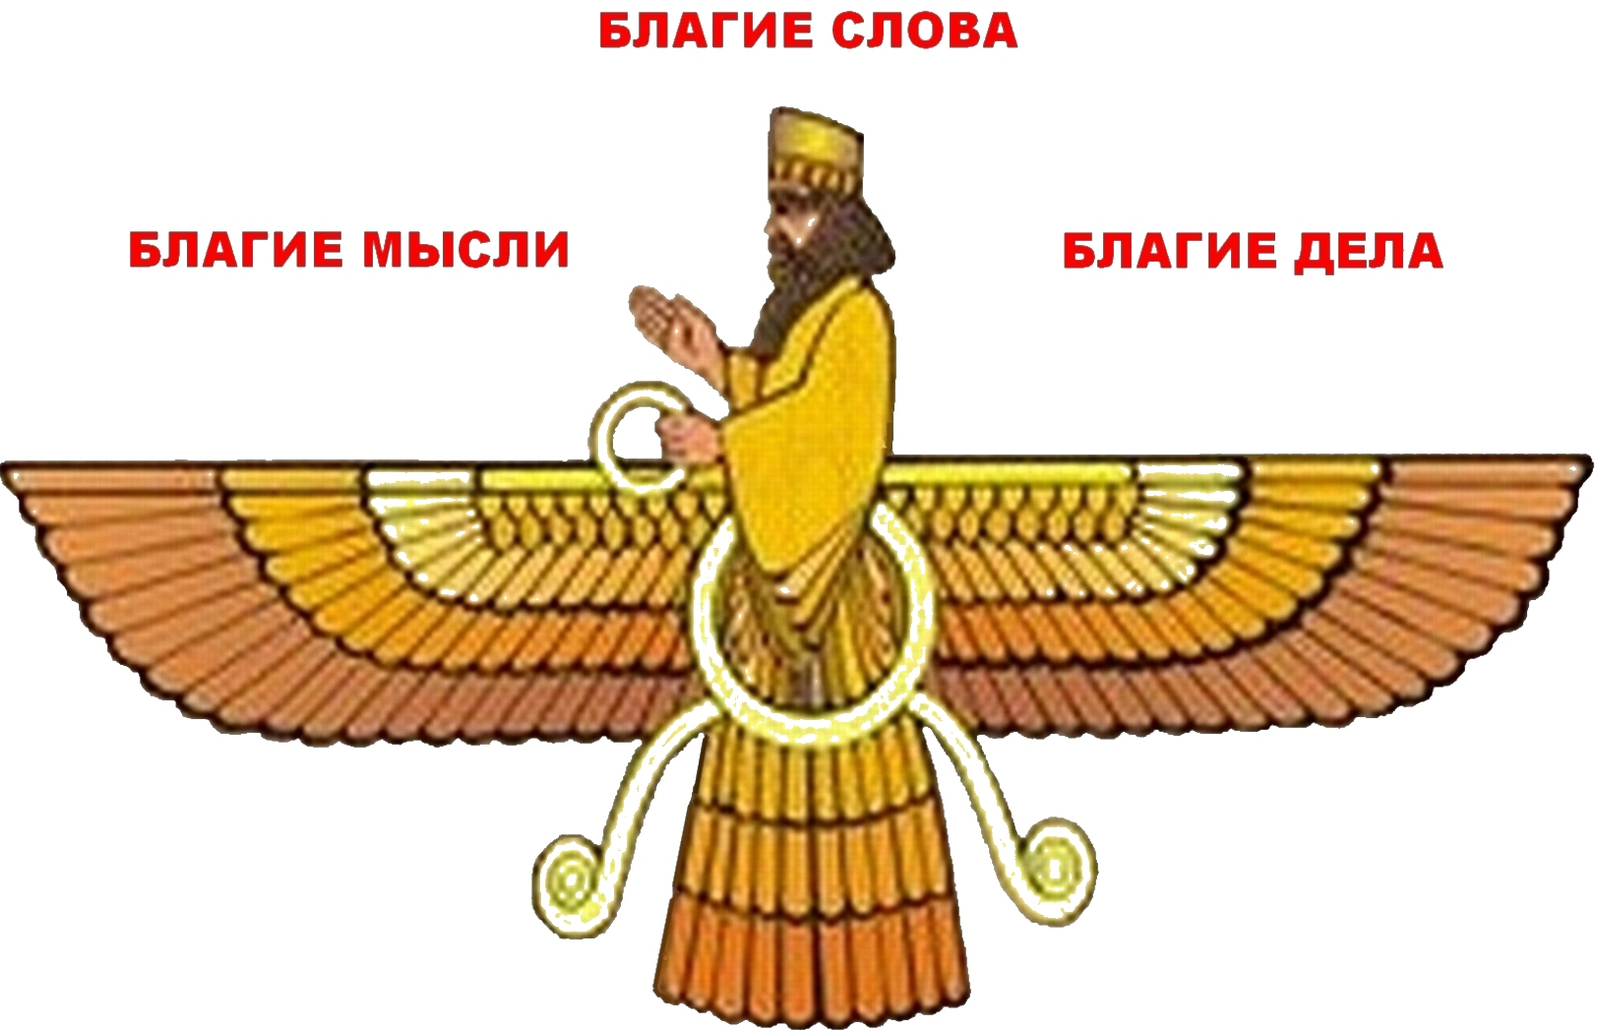 Thus spoke Zoroaster. - Zoroastrianism, Zoroaster, Story, Iran, Longpost